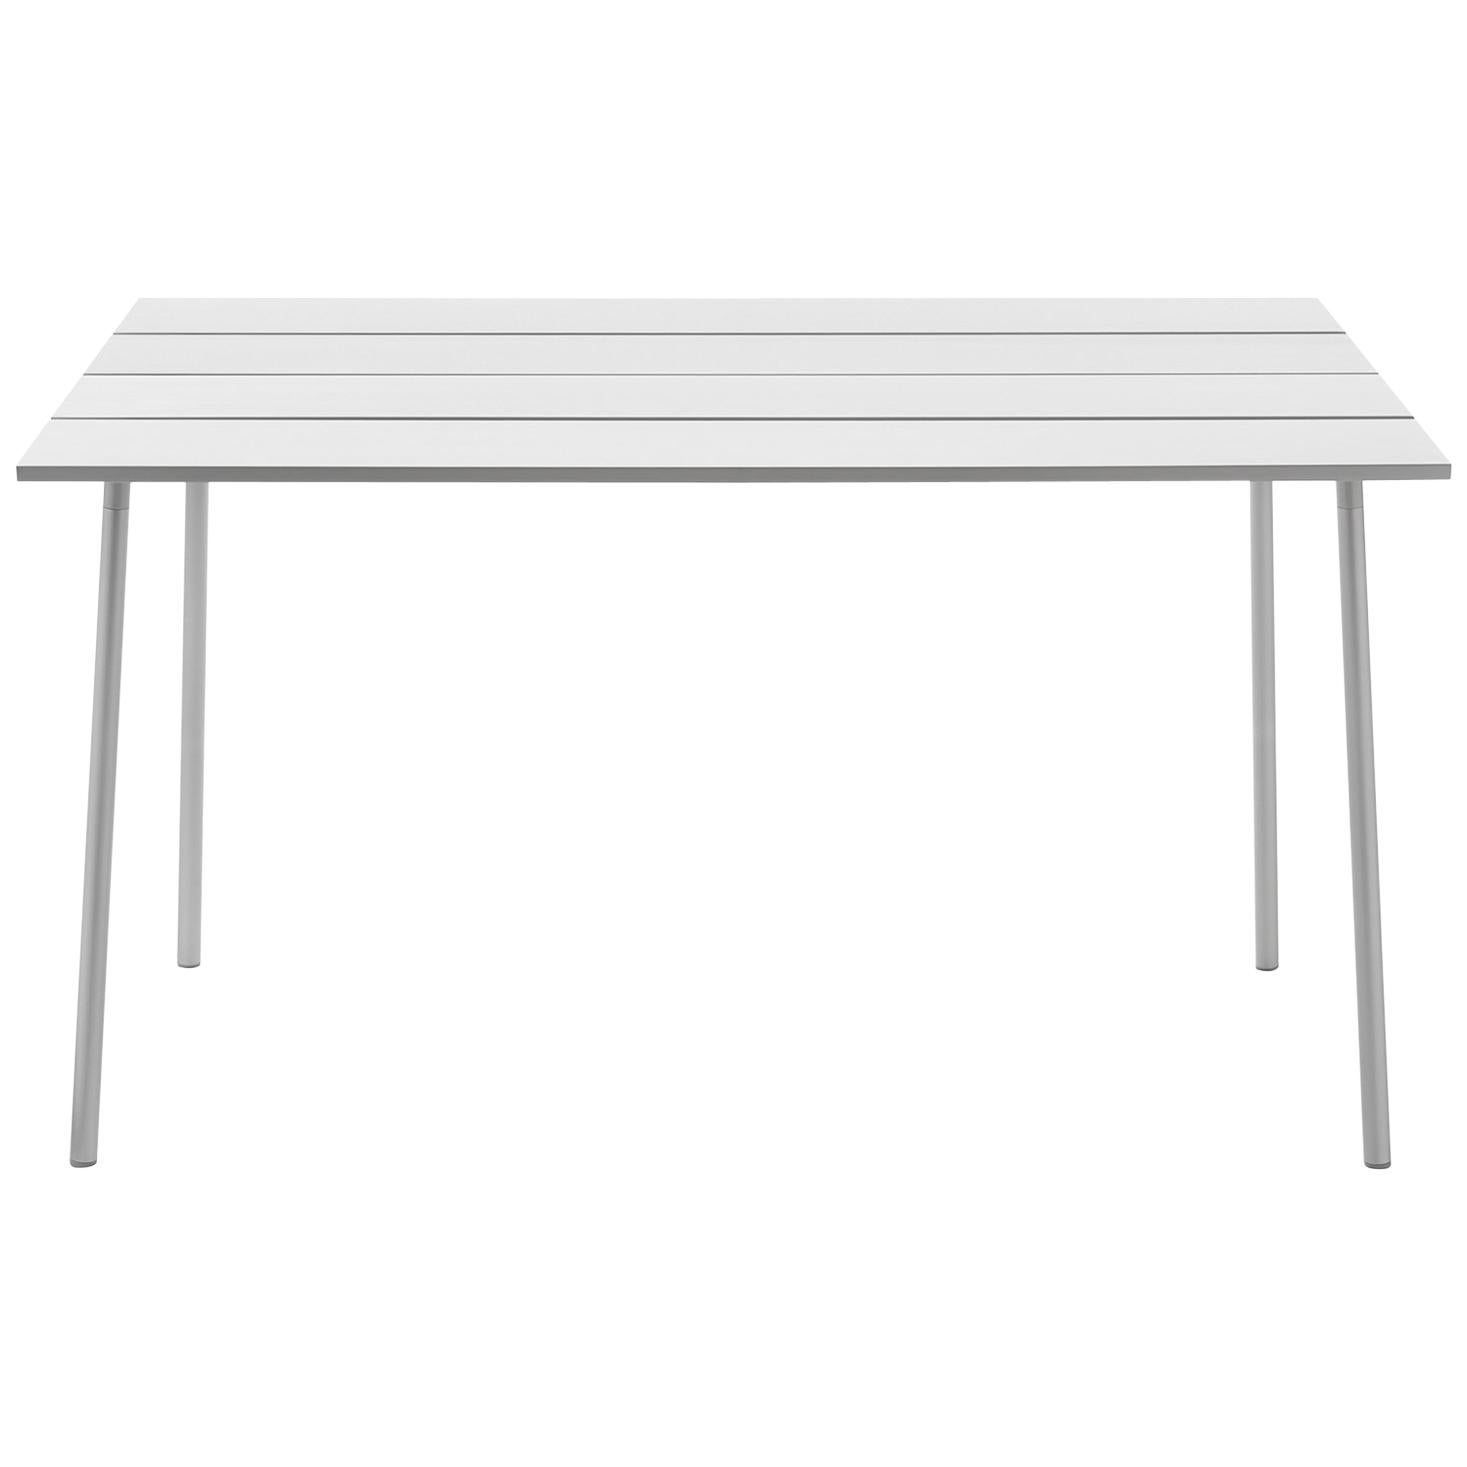 Grande table haute Emeco Run en aluminium anodisé transparent par Sam Hecht & Kim Colin